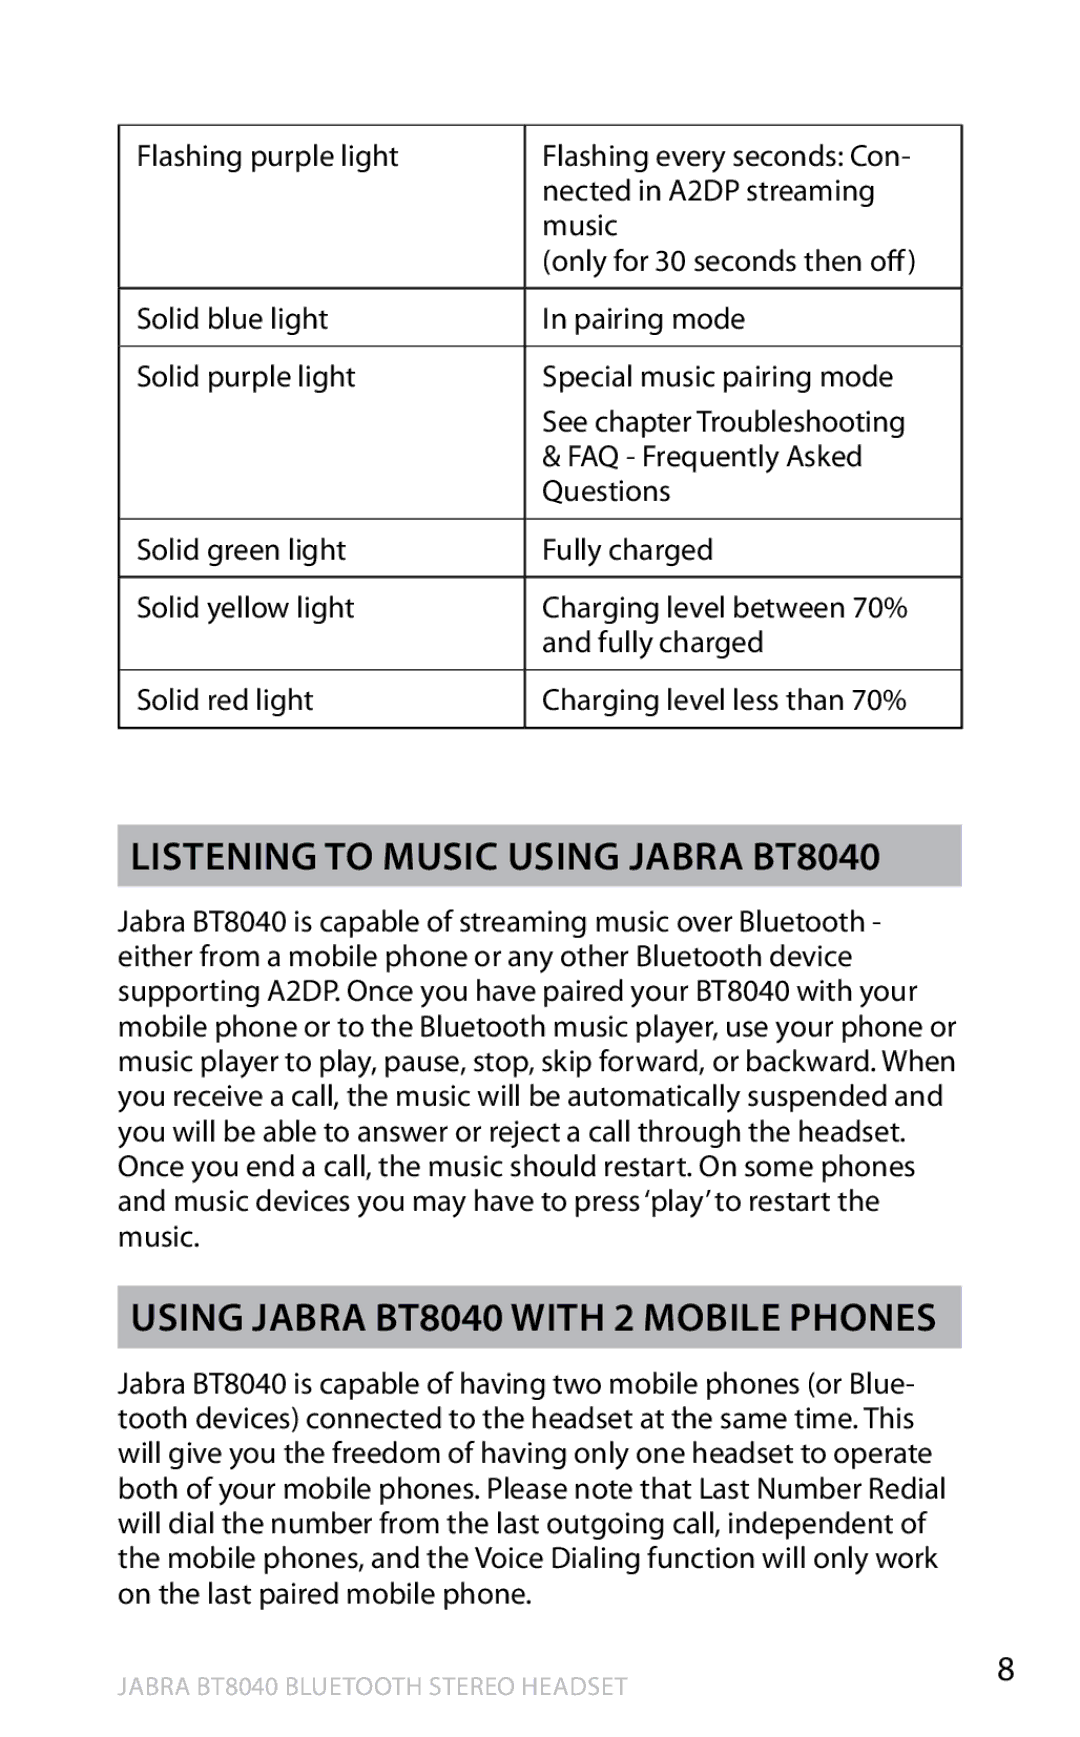 Jabra user manual Listening to music using Jabra BT8040, Using Jabra BT8040 with 2 mobile phones 